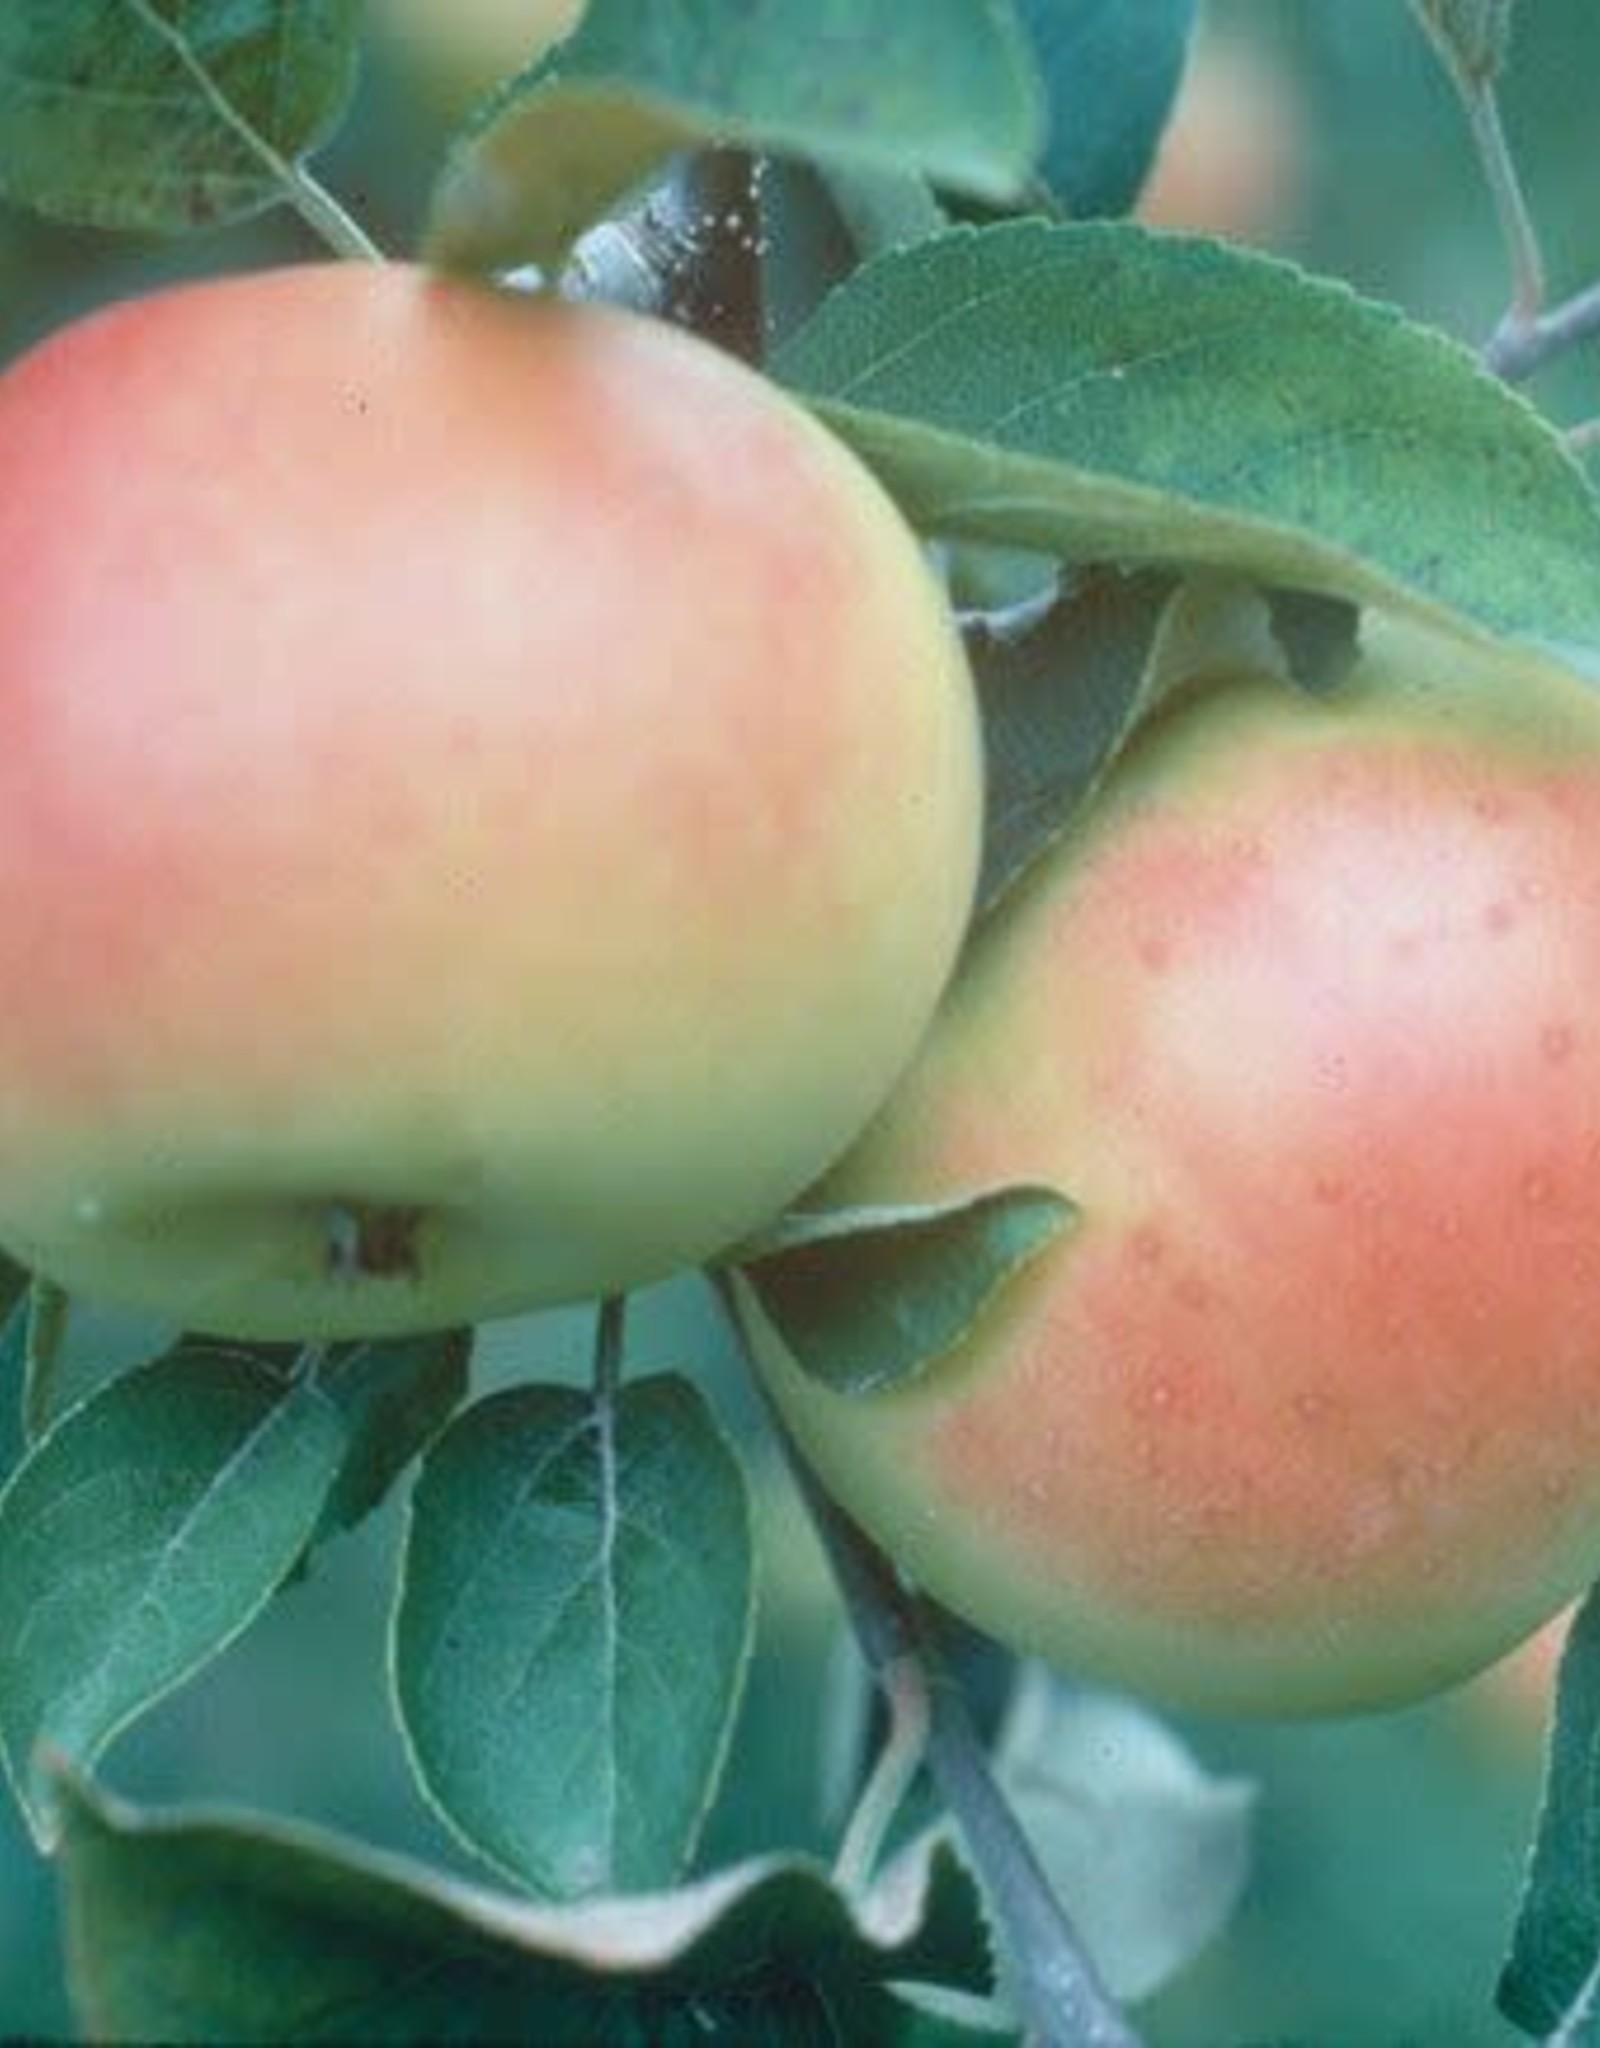 Bron and Sons Malus 'Goodland' Apple tree #5